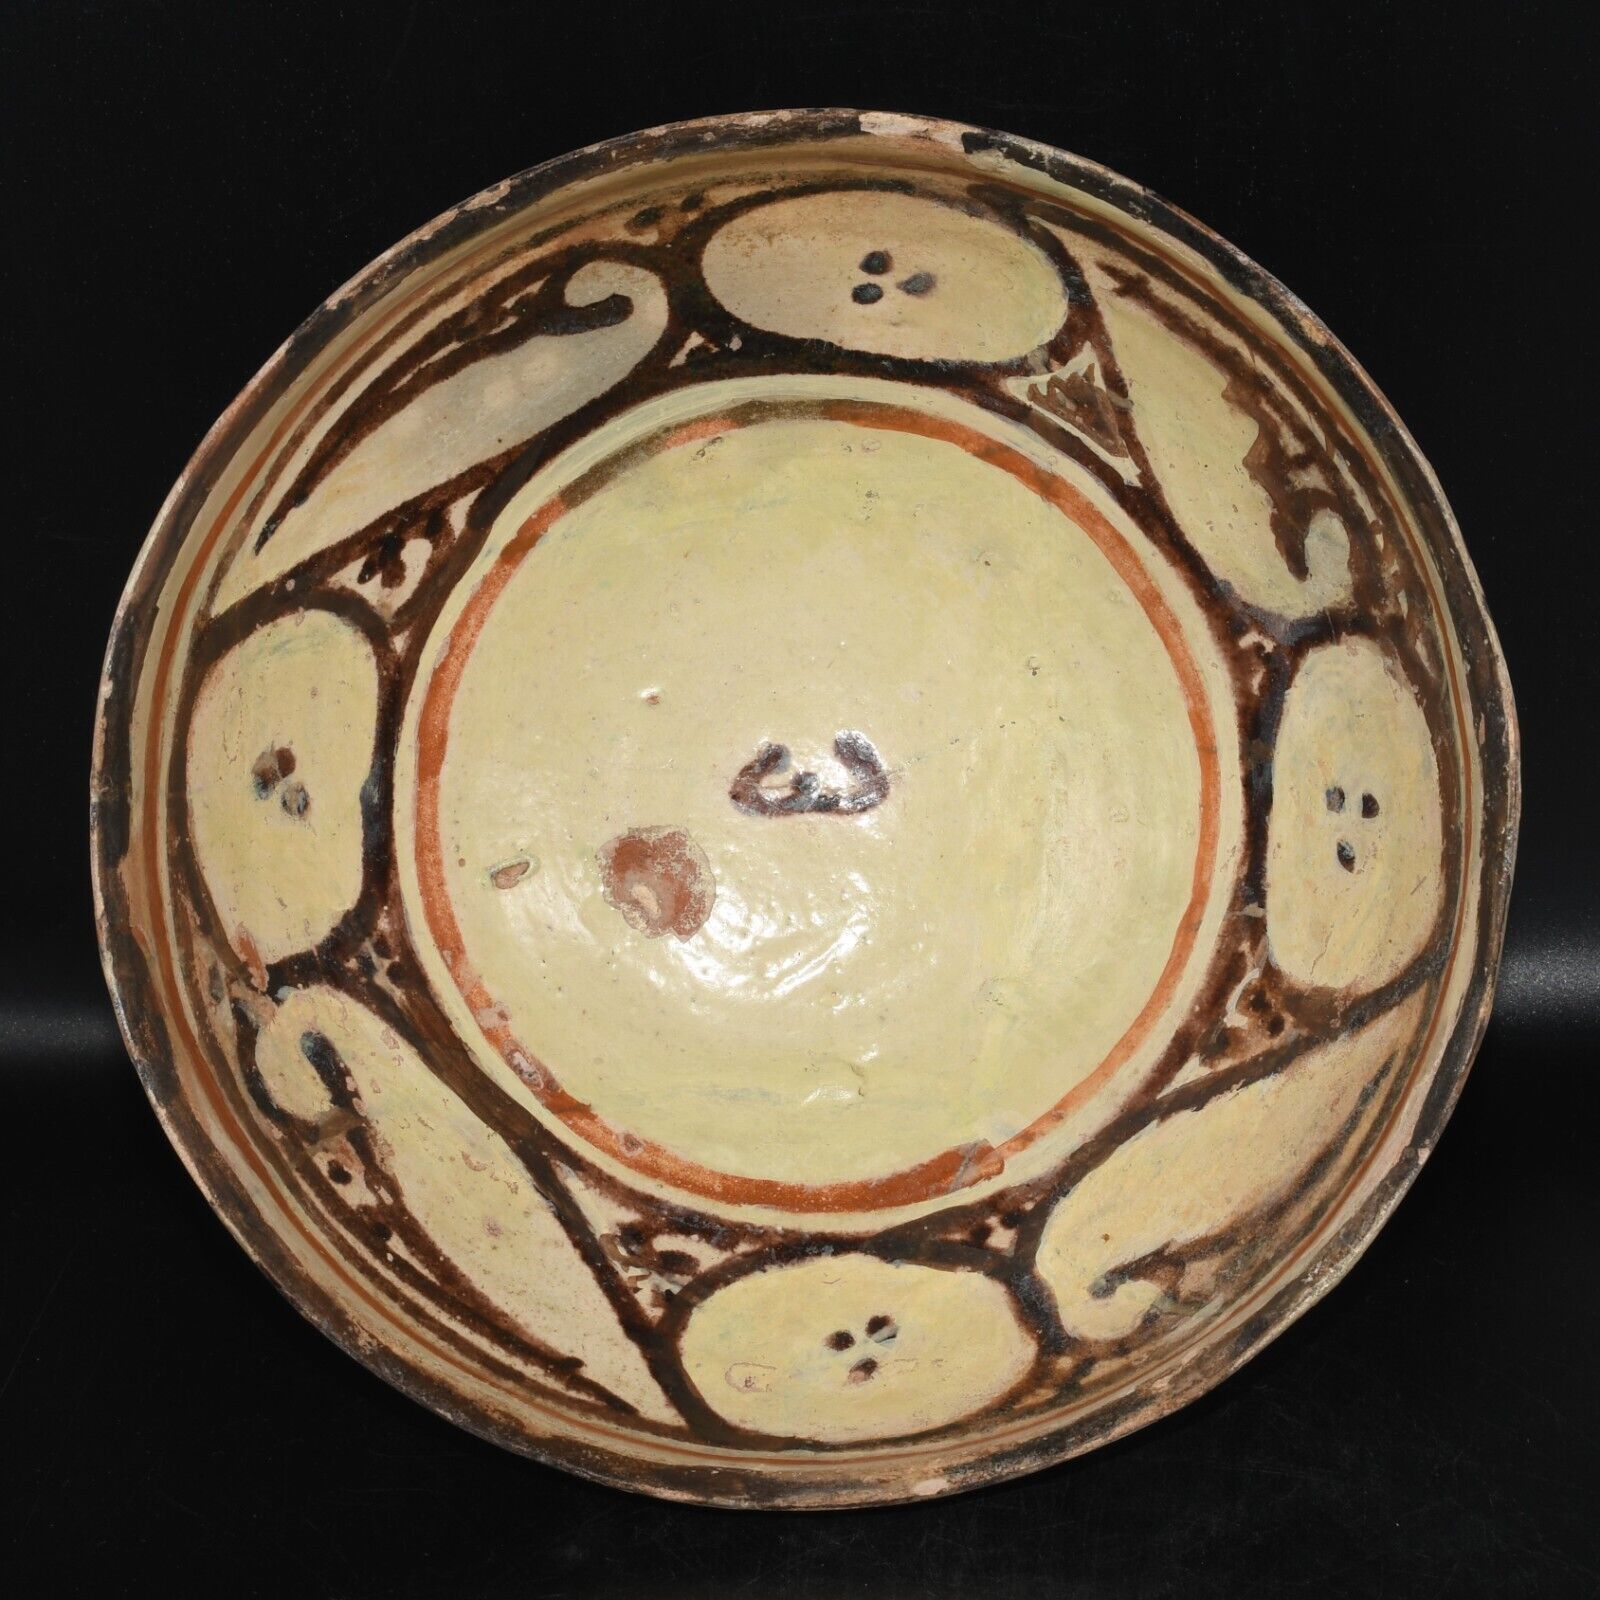 Intact Ancient Early Islamic Near Eastern Nishapur Ceramic Bowl 10th century A.D